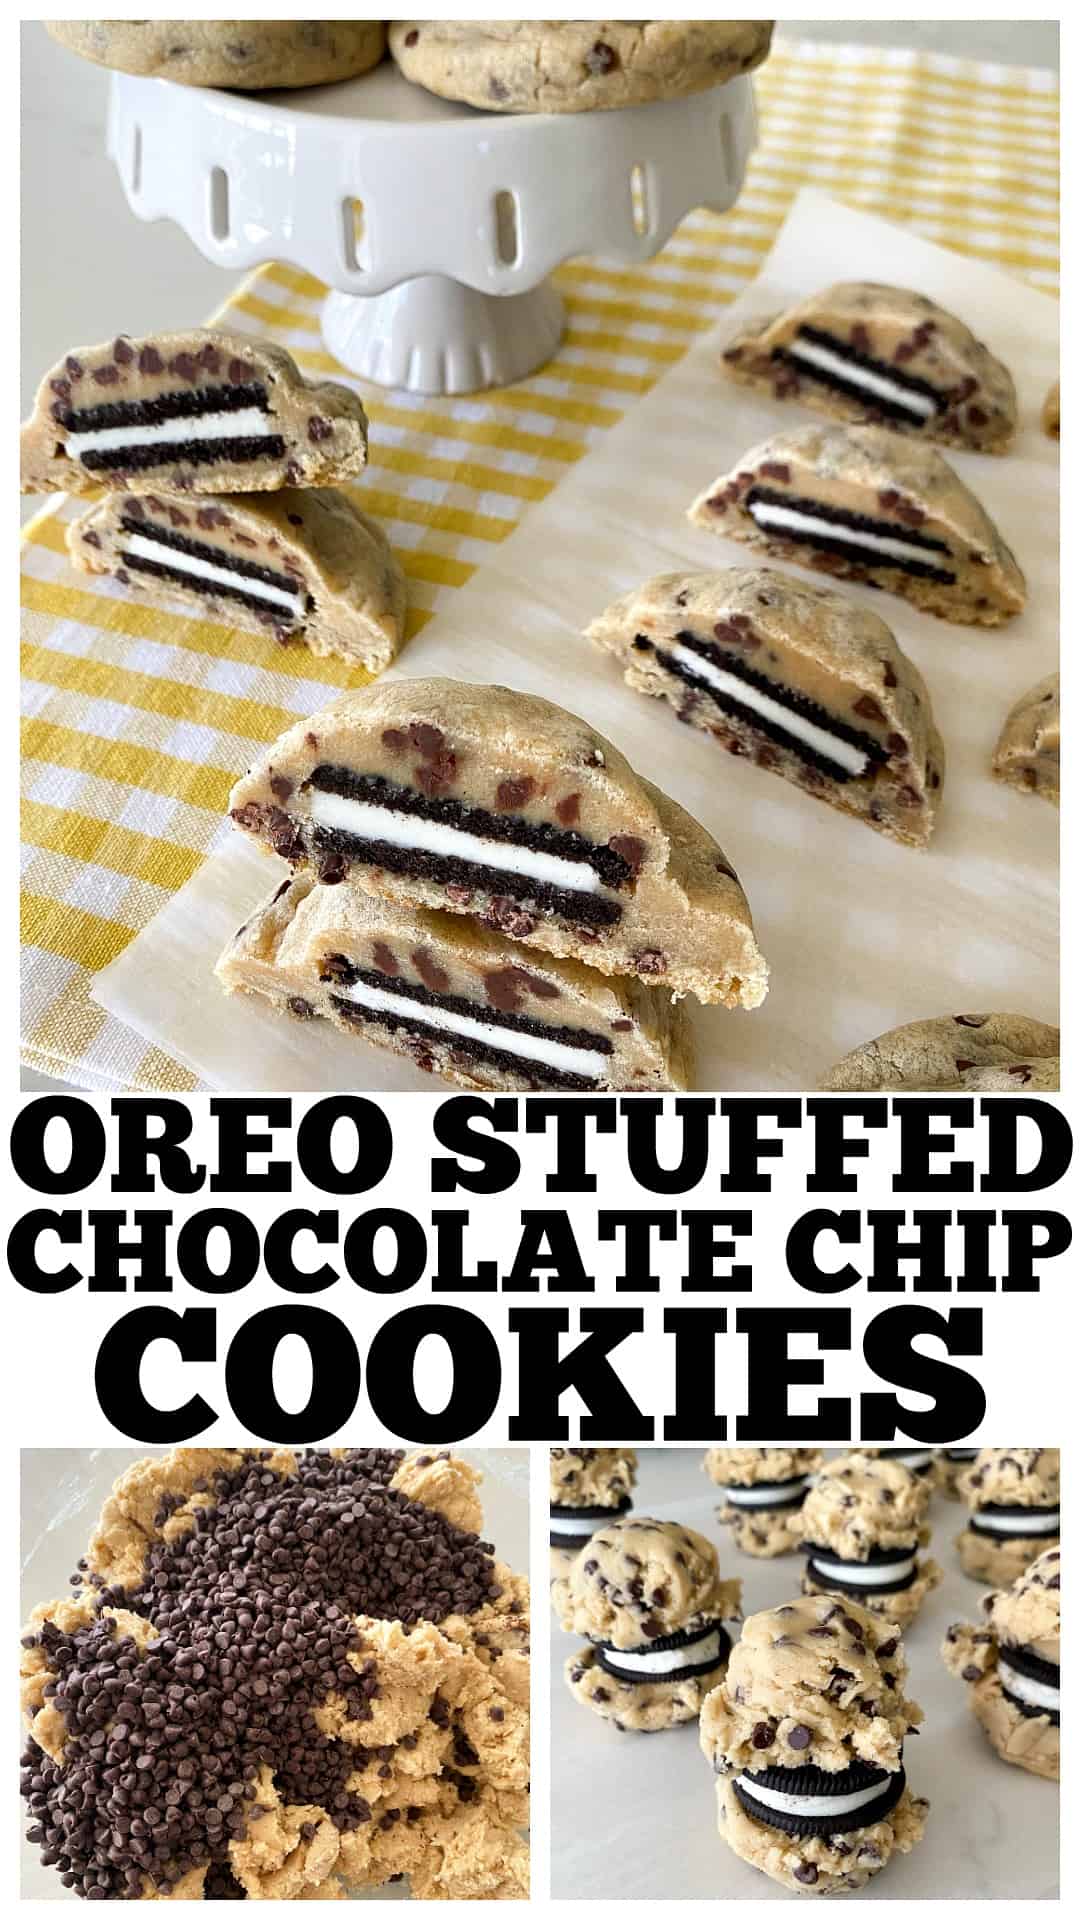 oreo stuffed chocolate chip cookies photo collage 